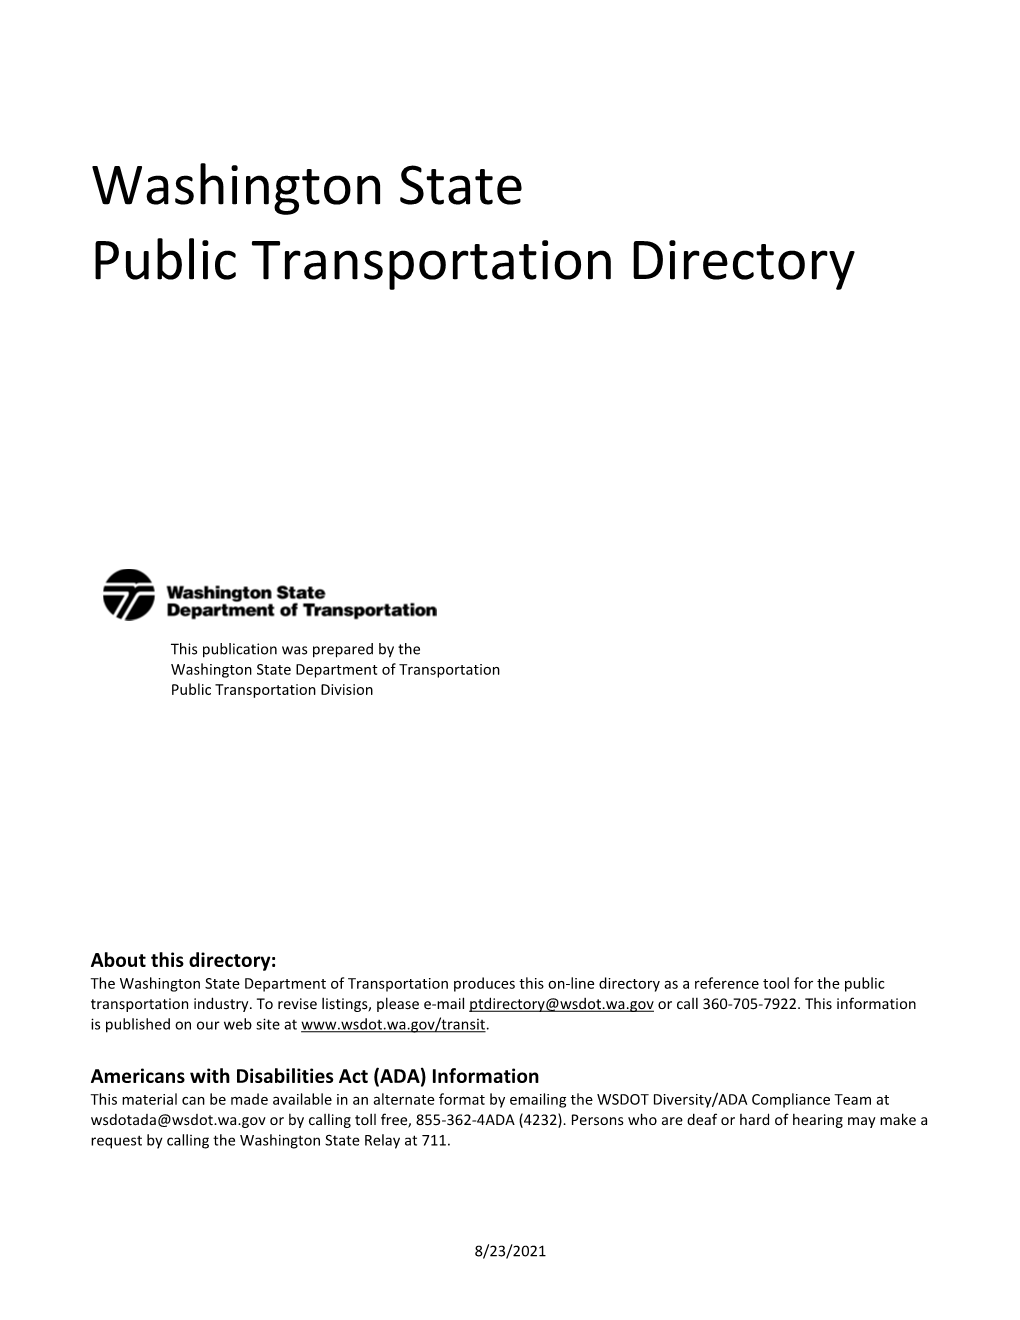 Washington State Public Transportation Directory